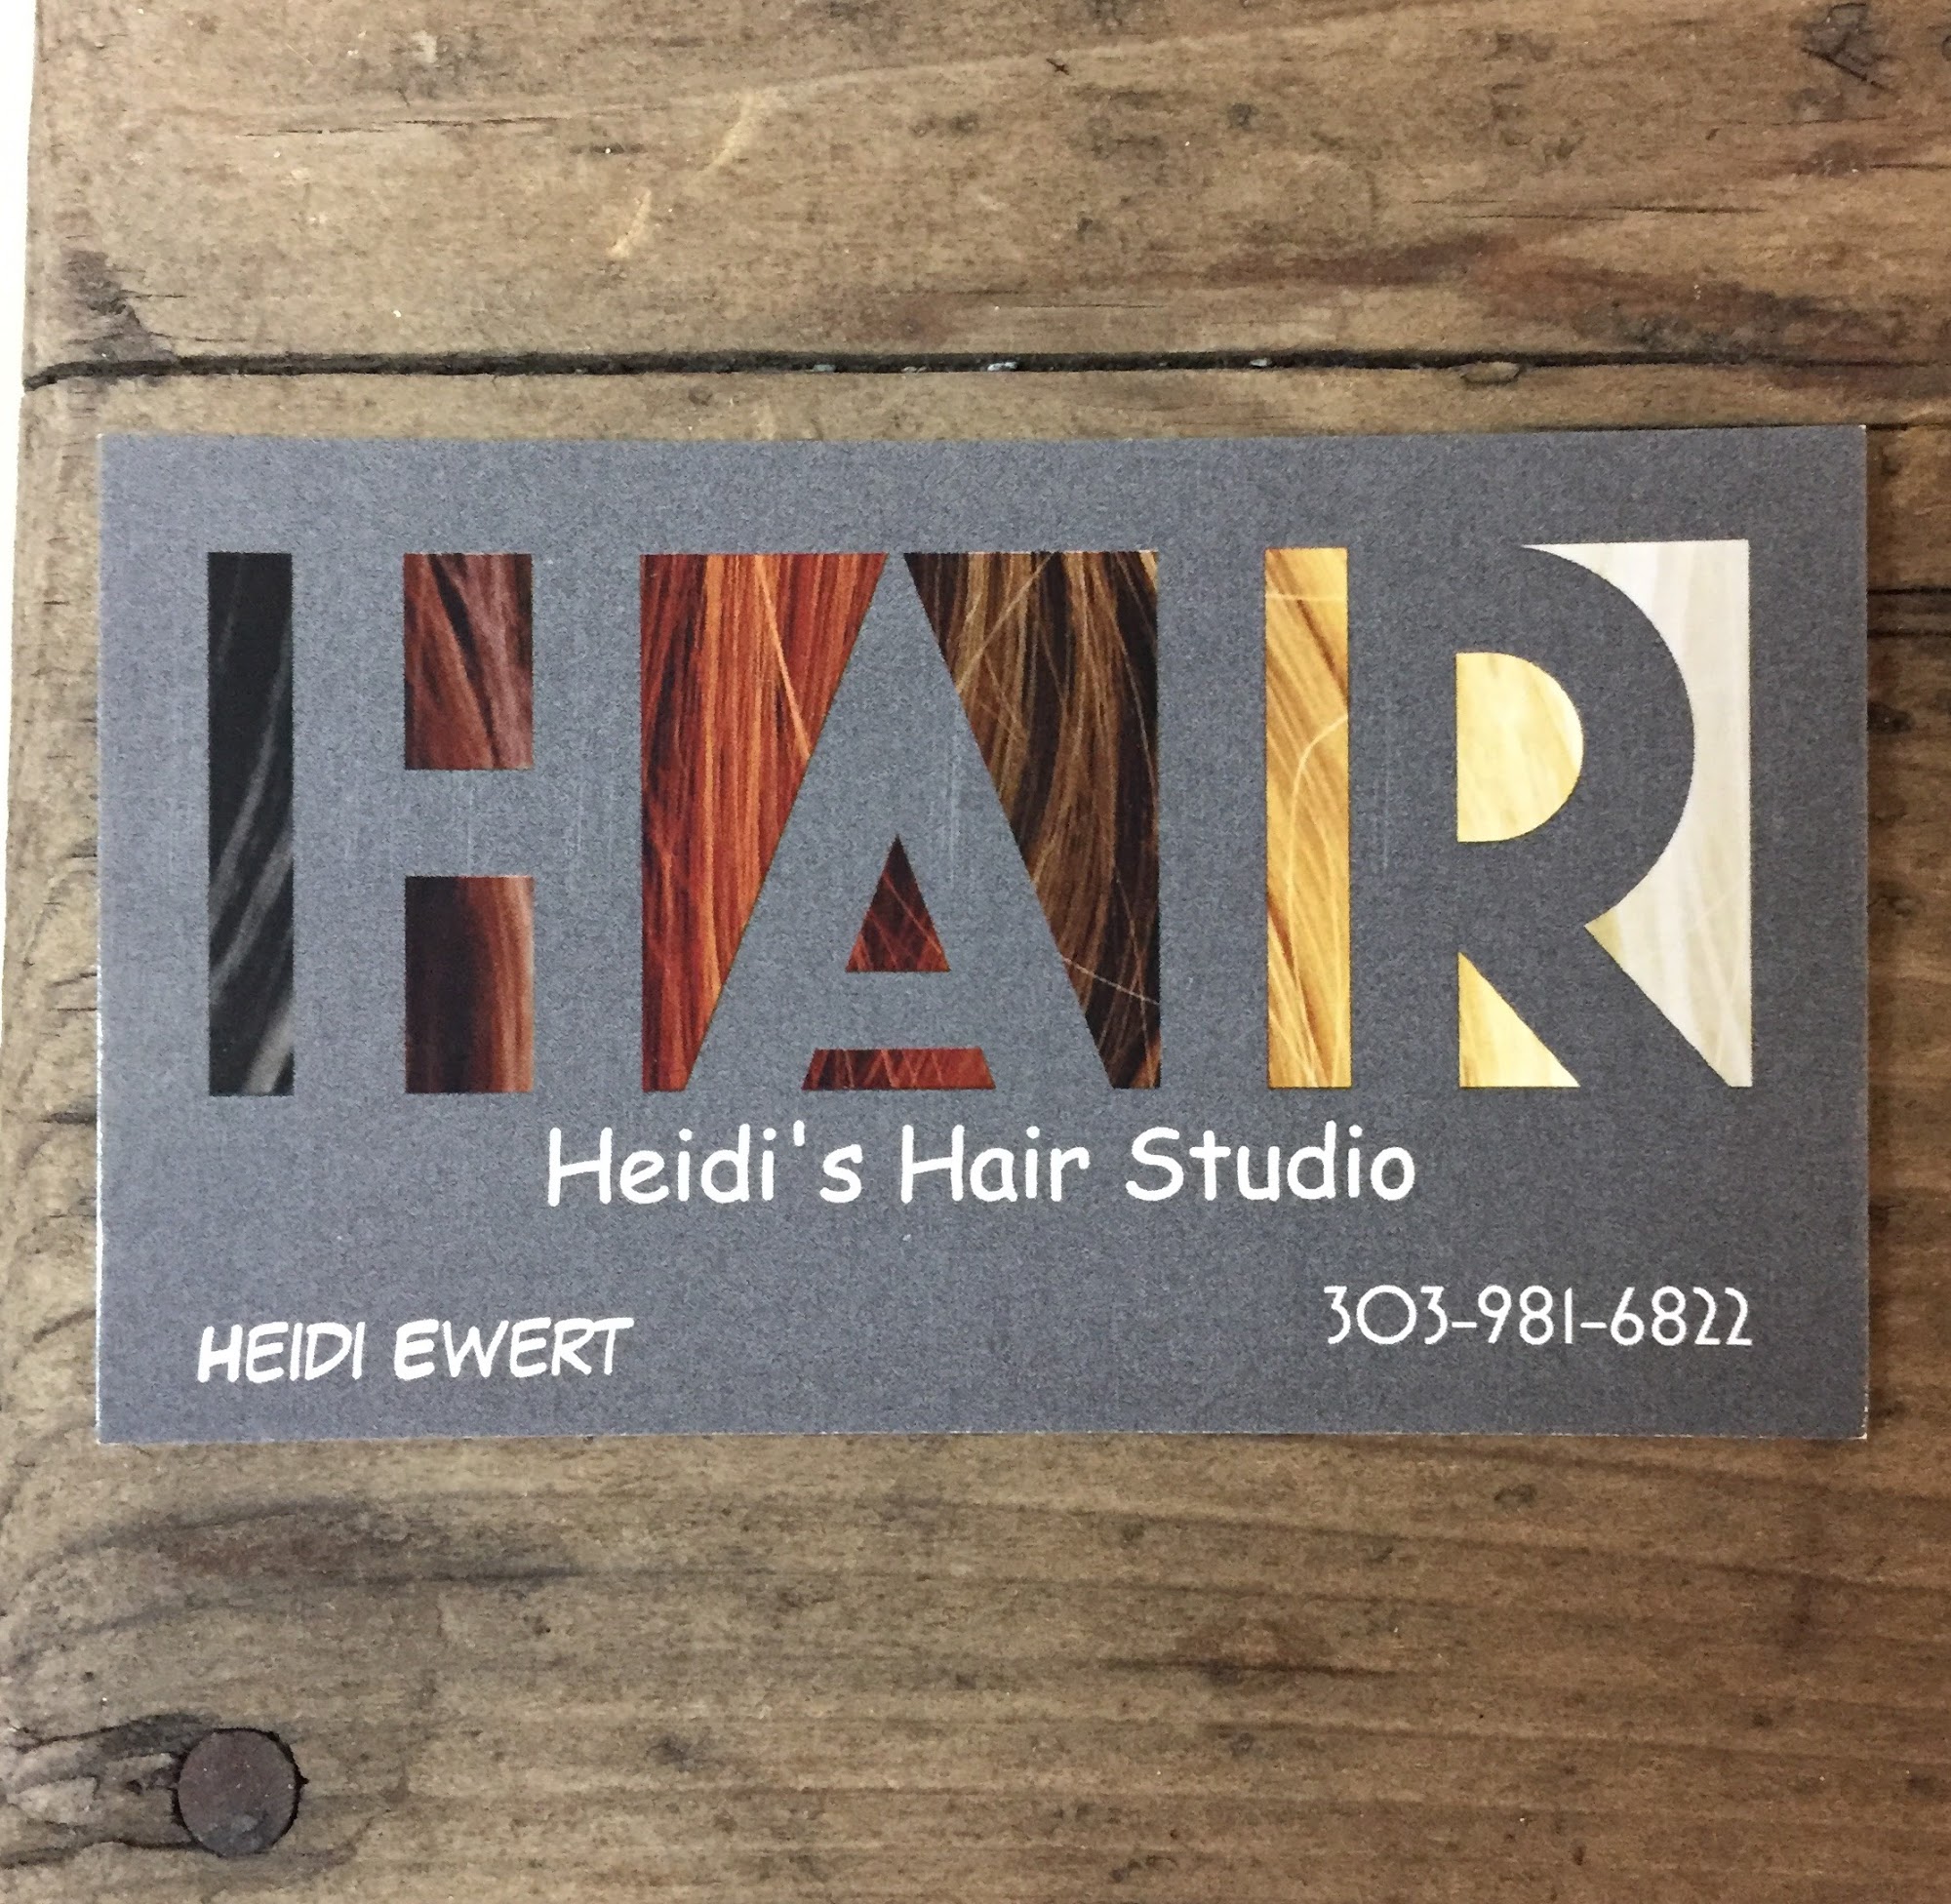 Heidi’s Hair Studio 26030 CO-74, Kittredge Colorado 80457